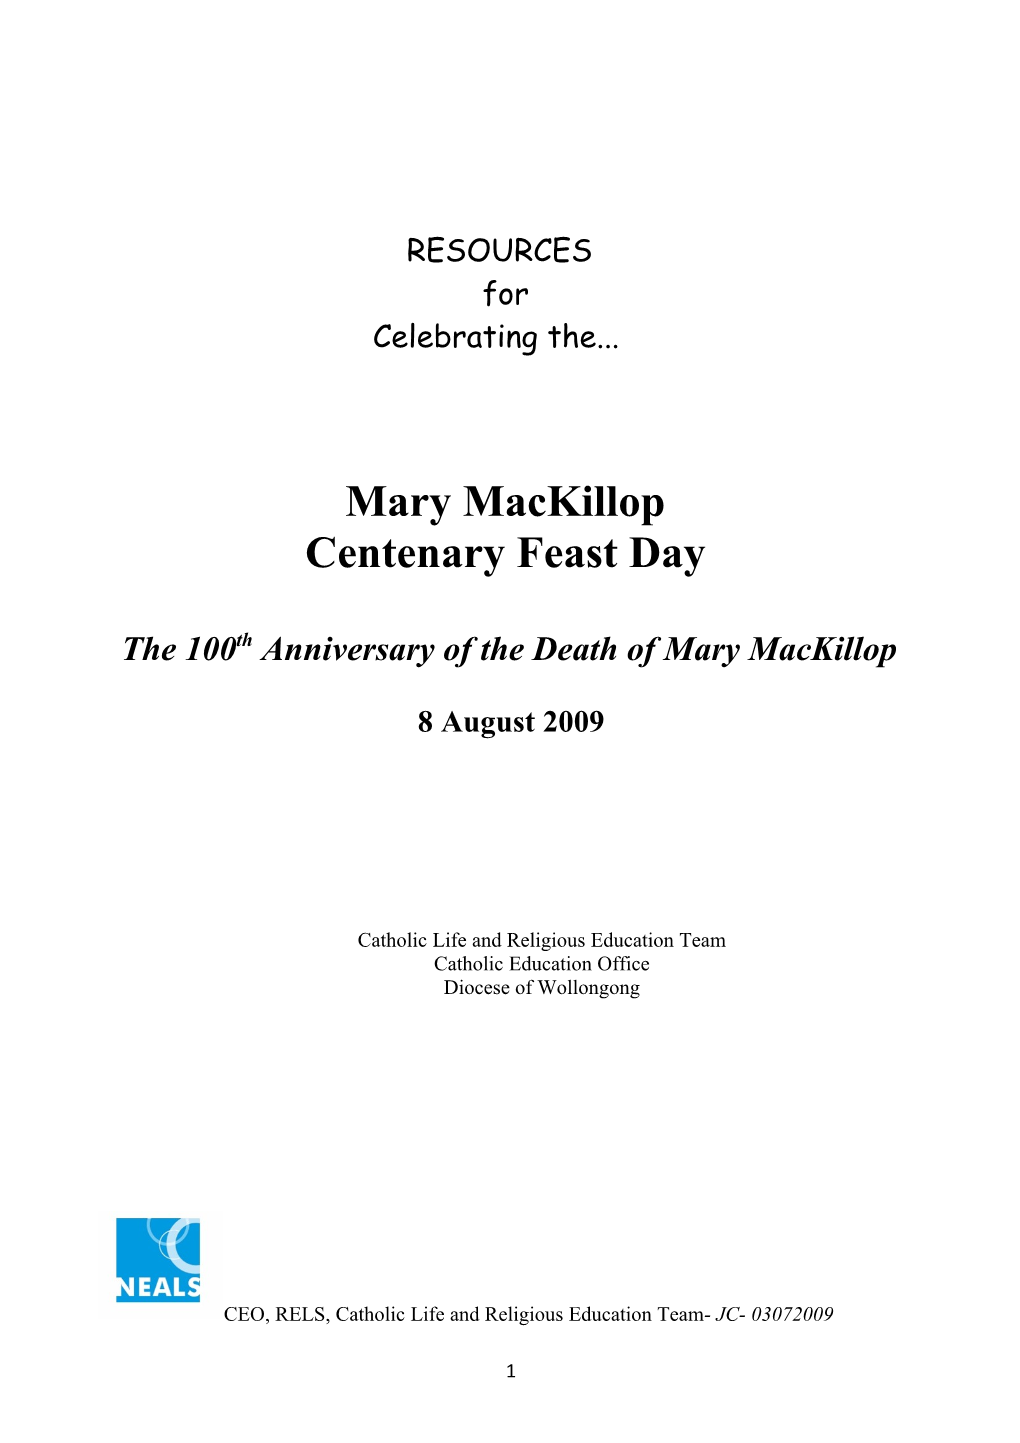 Centenary Feast Day